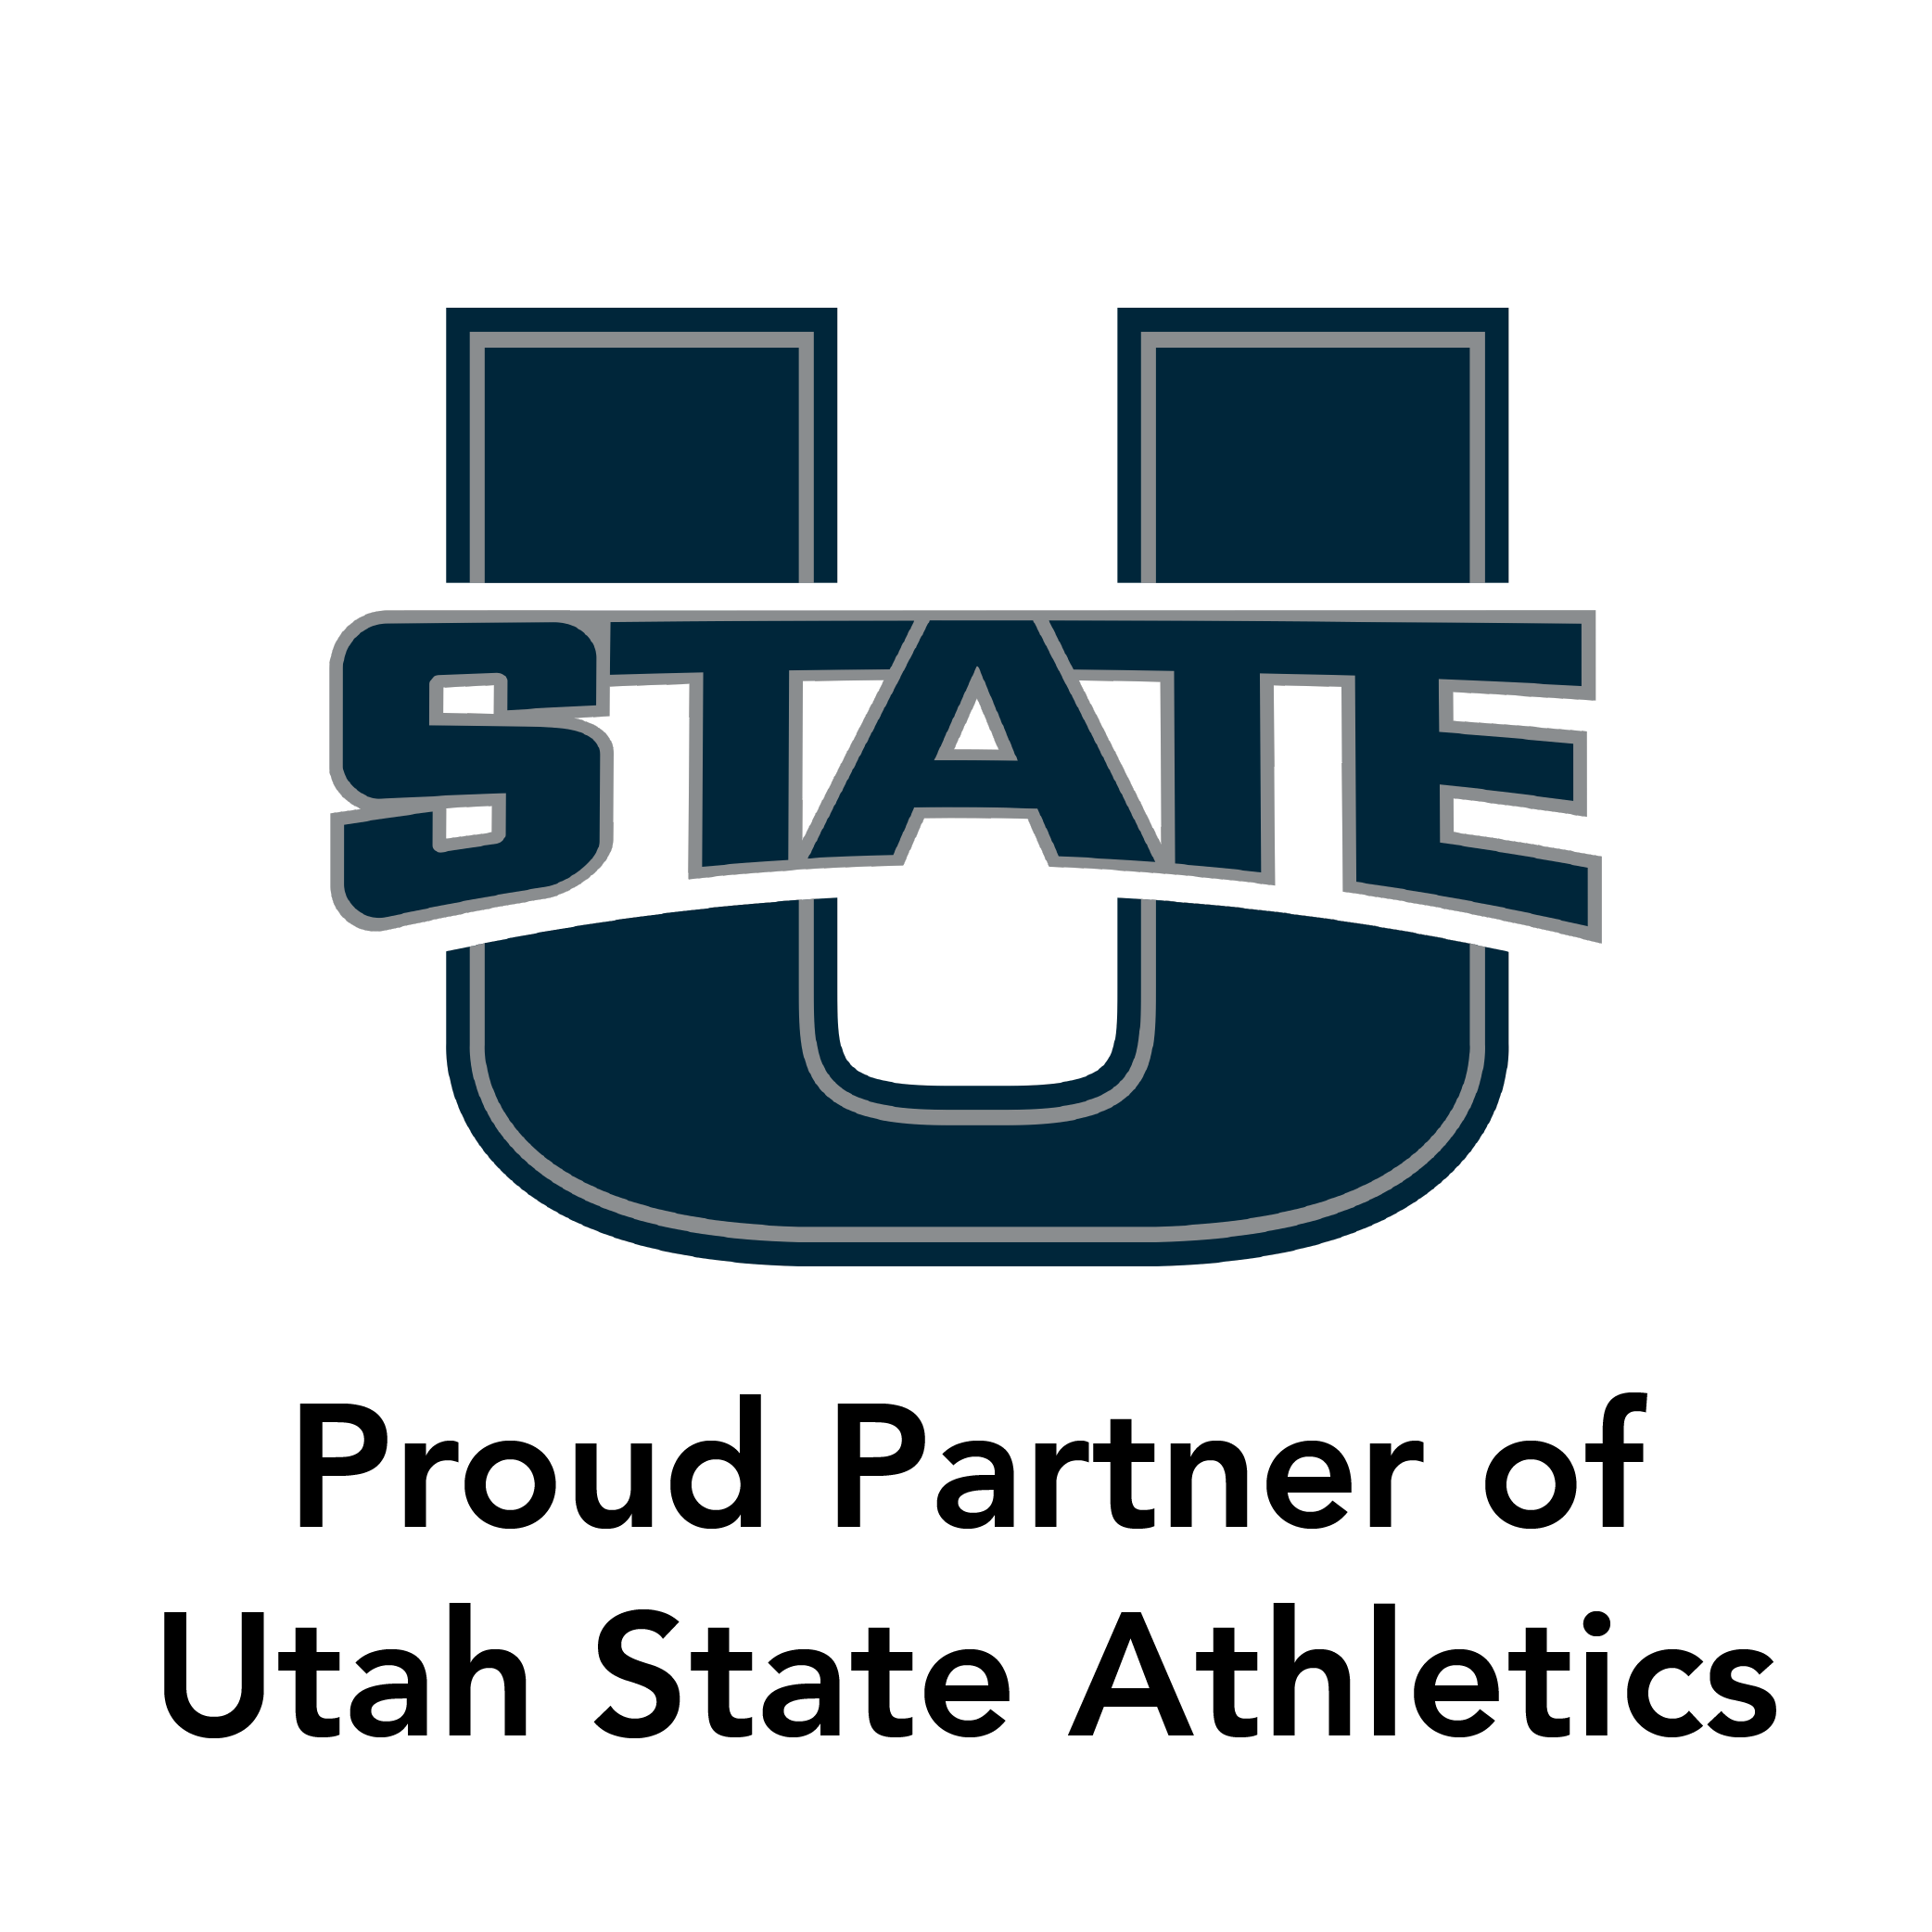 Utah State University logo followed by the text "Proud Sponsor of Utah State Athletics"